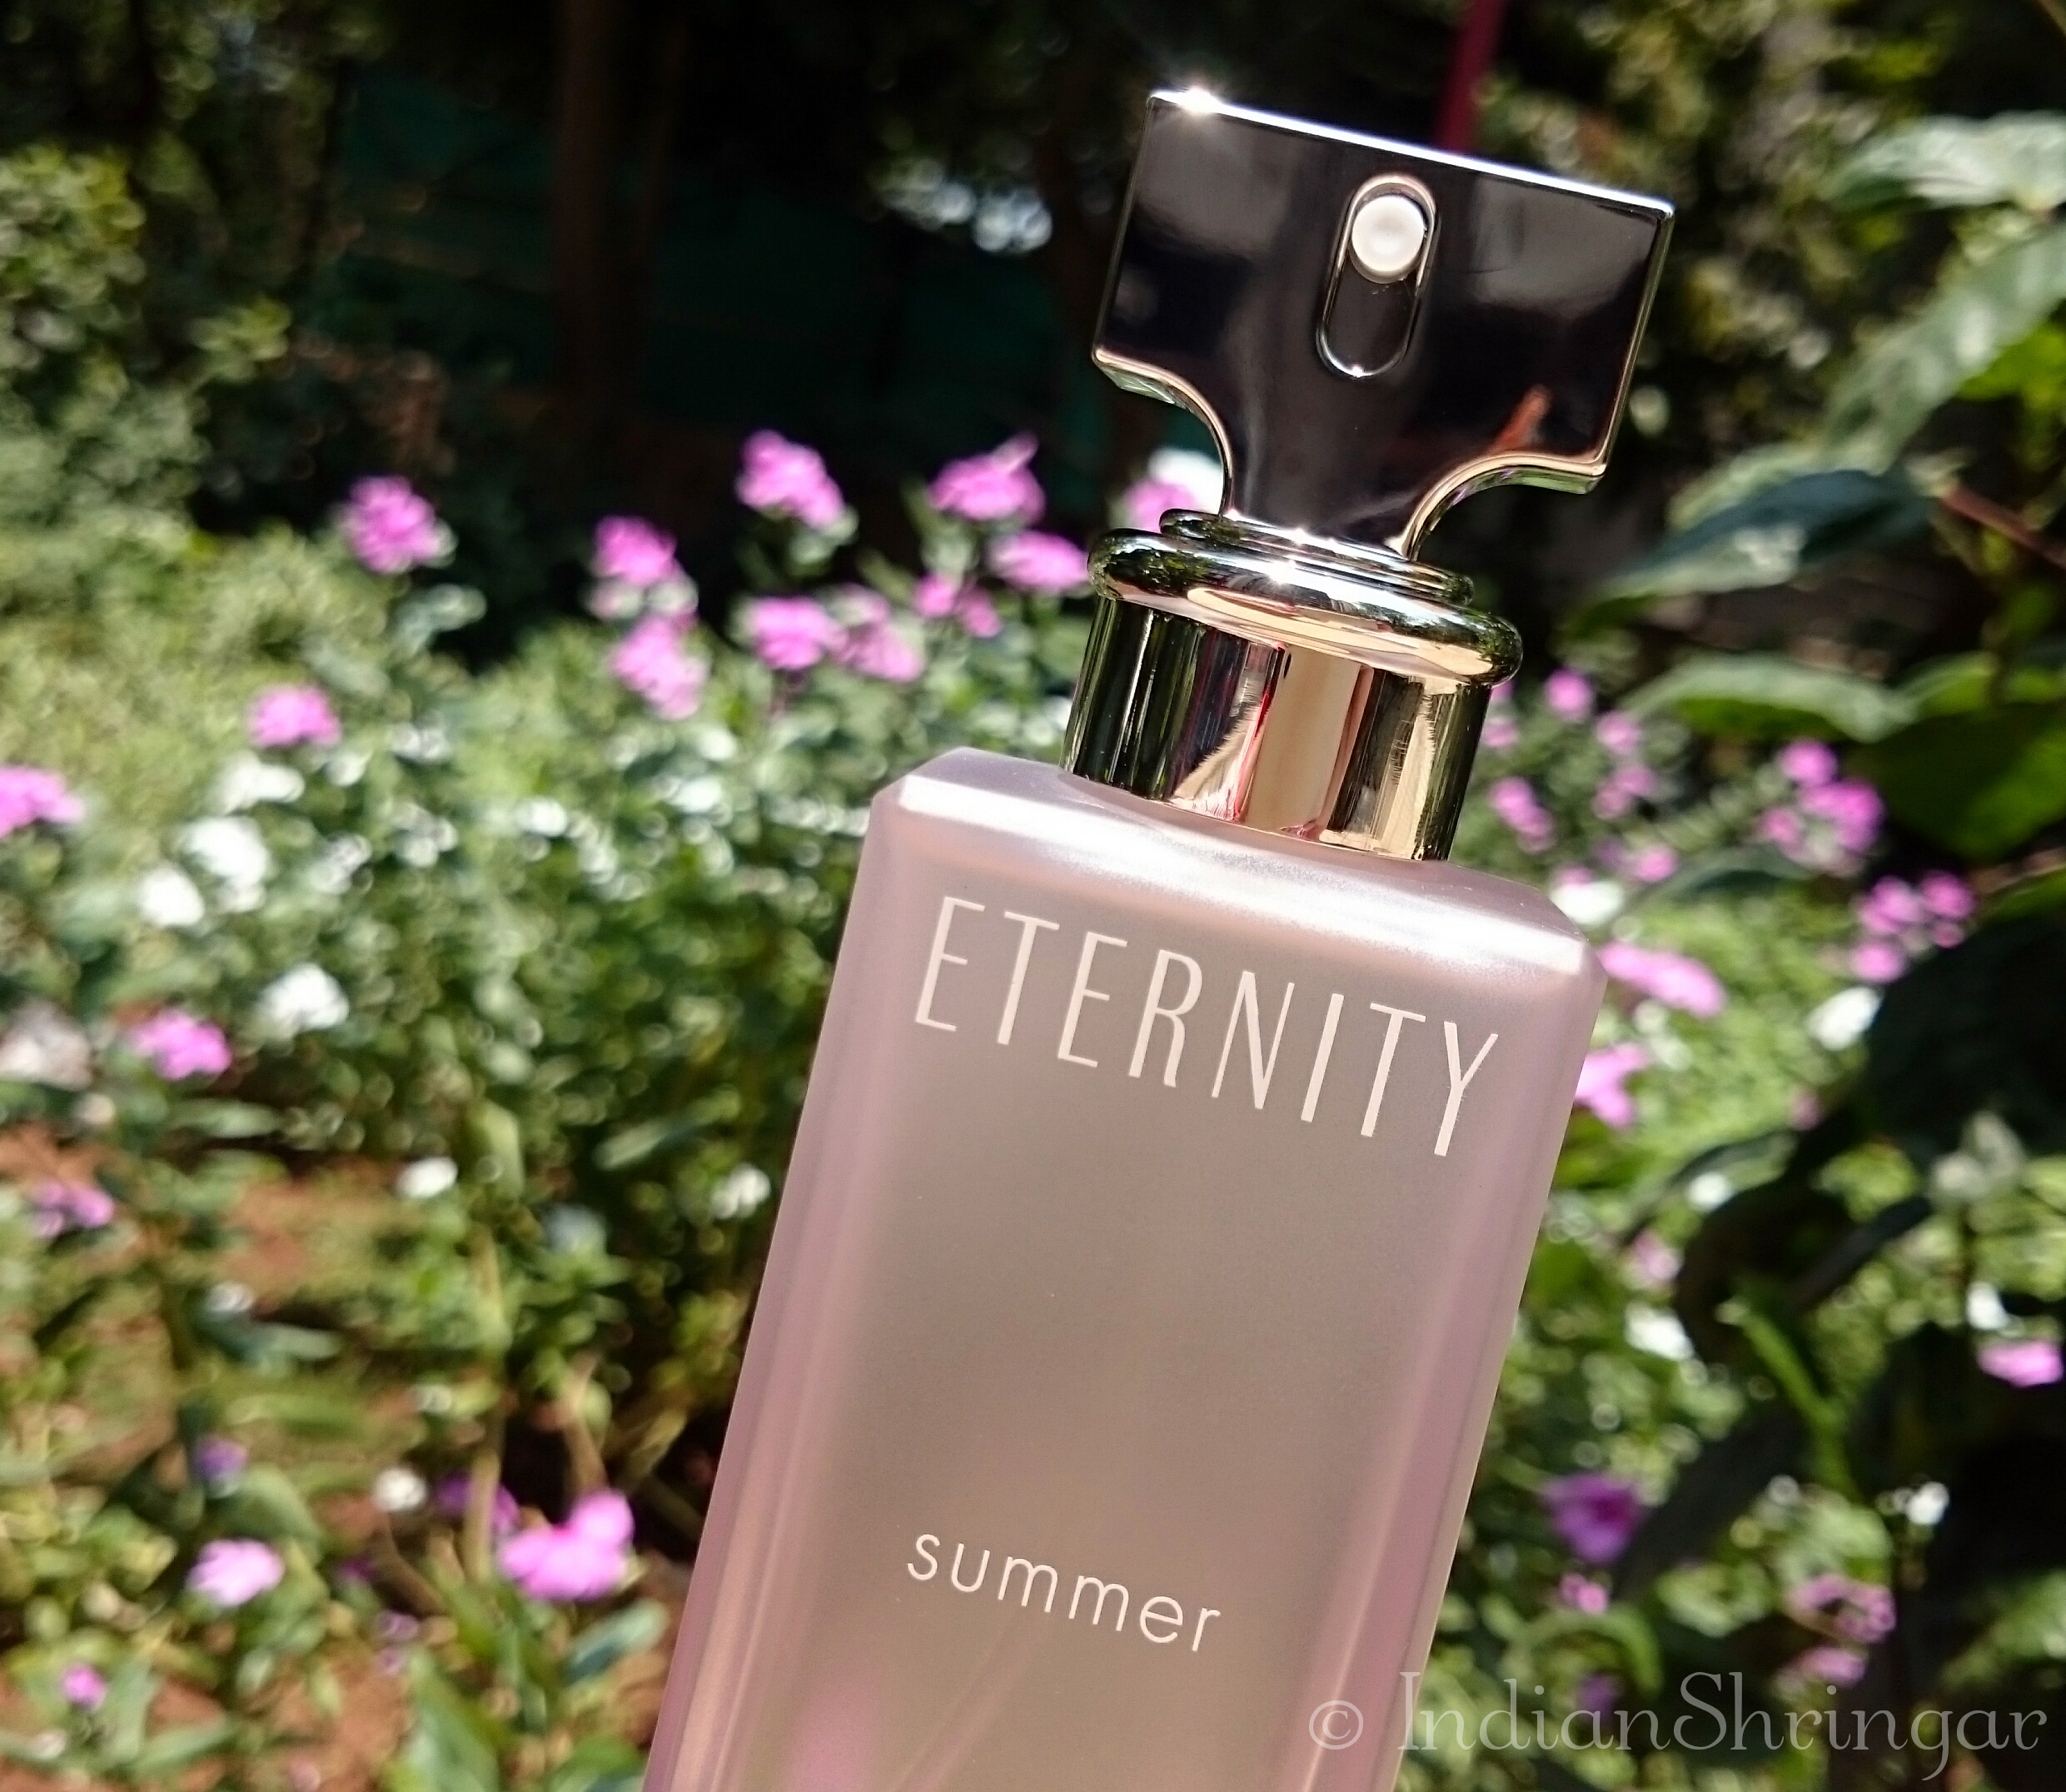 CK Eternity Summer review